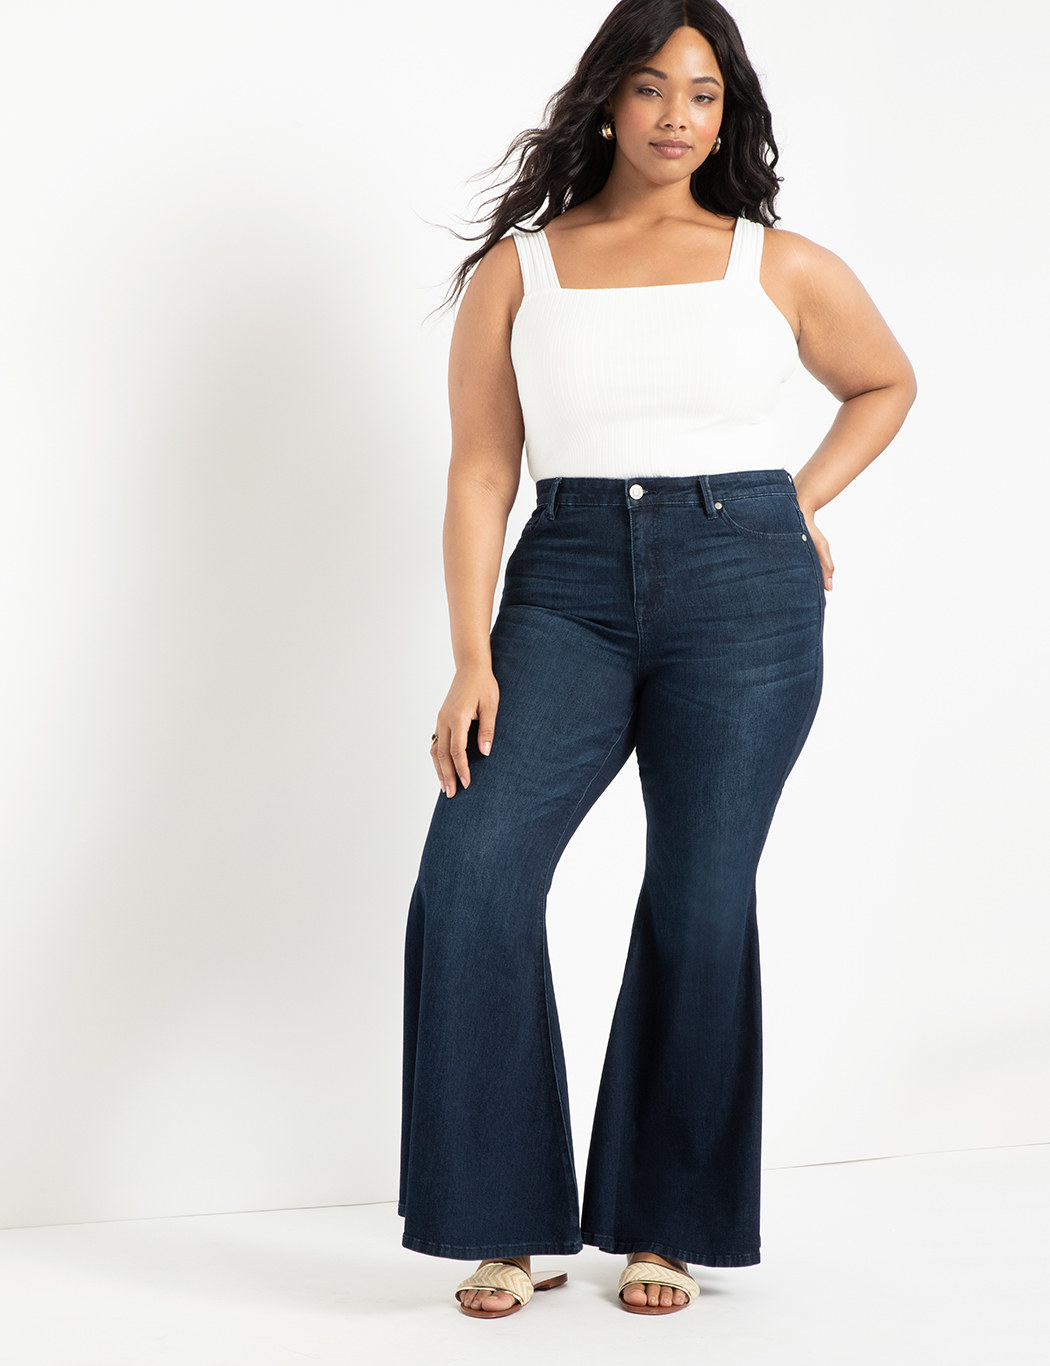 ALLABREVE Women's Plus Size Ripped Flare Jeans Elastic High Waist Bell Bottom Denim Pants 